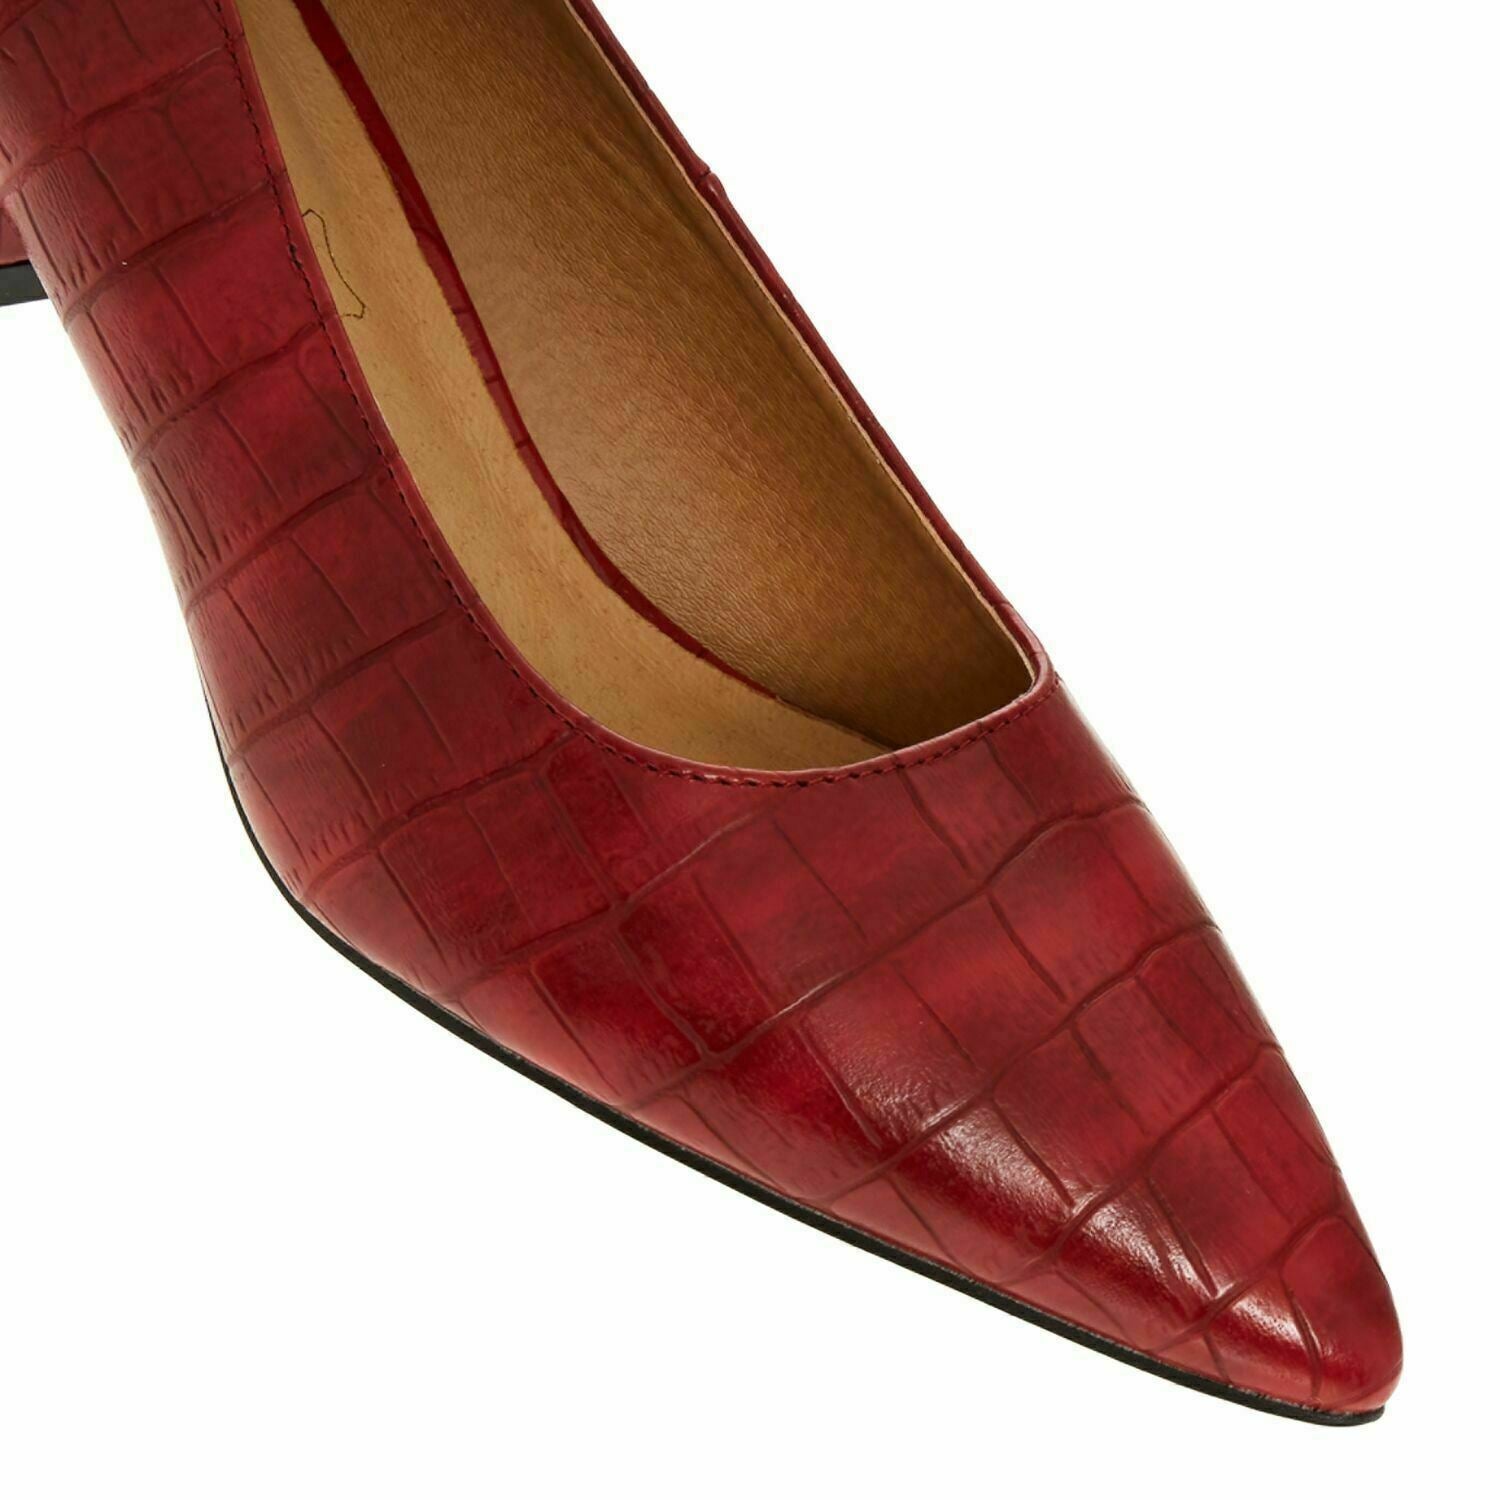 AZAREY Women's Red Moc Croc Heeled Pumps Court Shoes, size UK 5 / EU 38